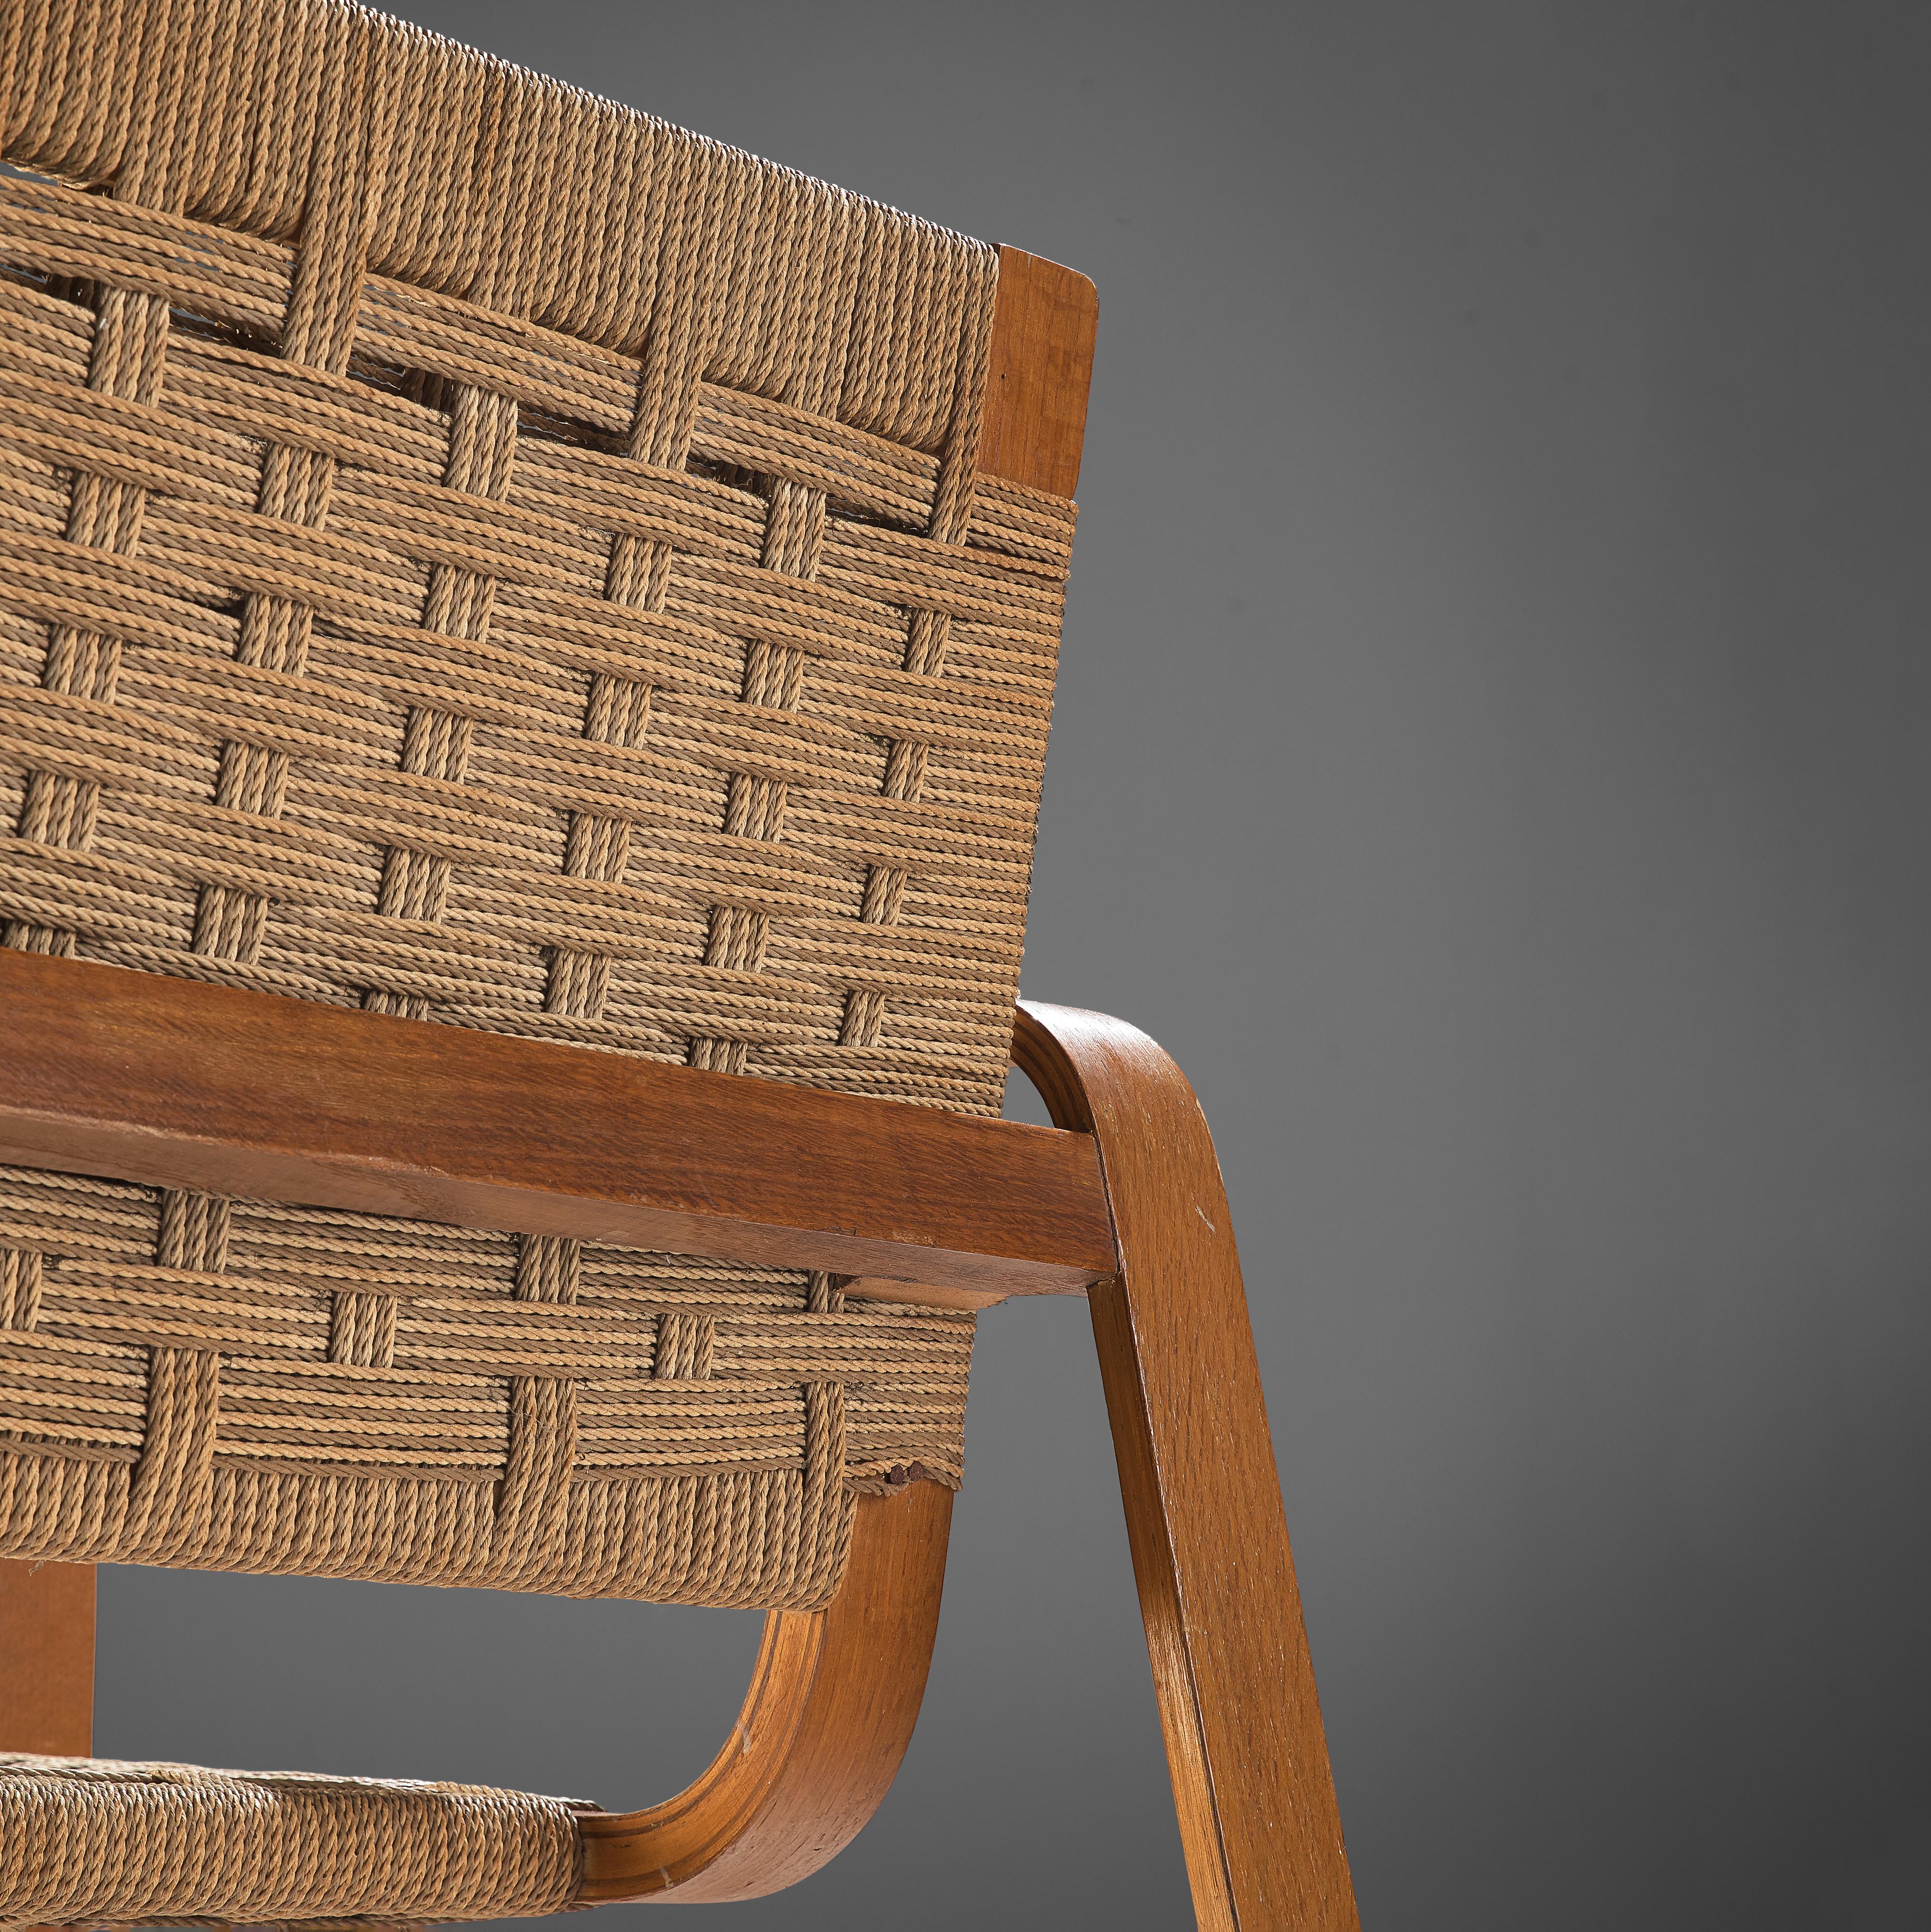 Mid-Century Modern Giuseppe Pagano Pogatschnig Pair of Bentwood Lounge Chairs, 1940s